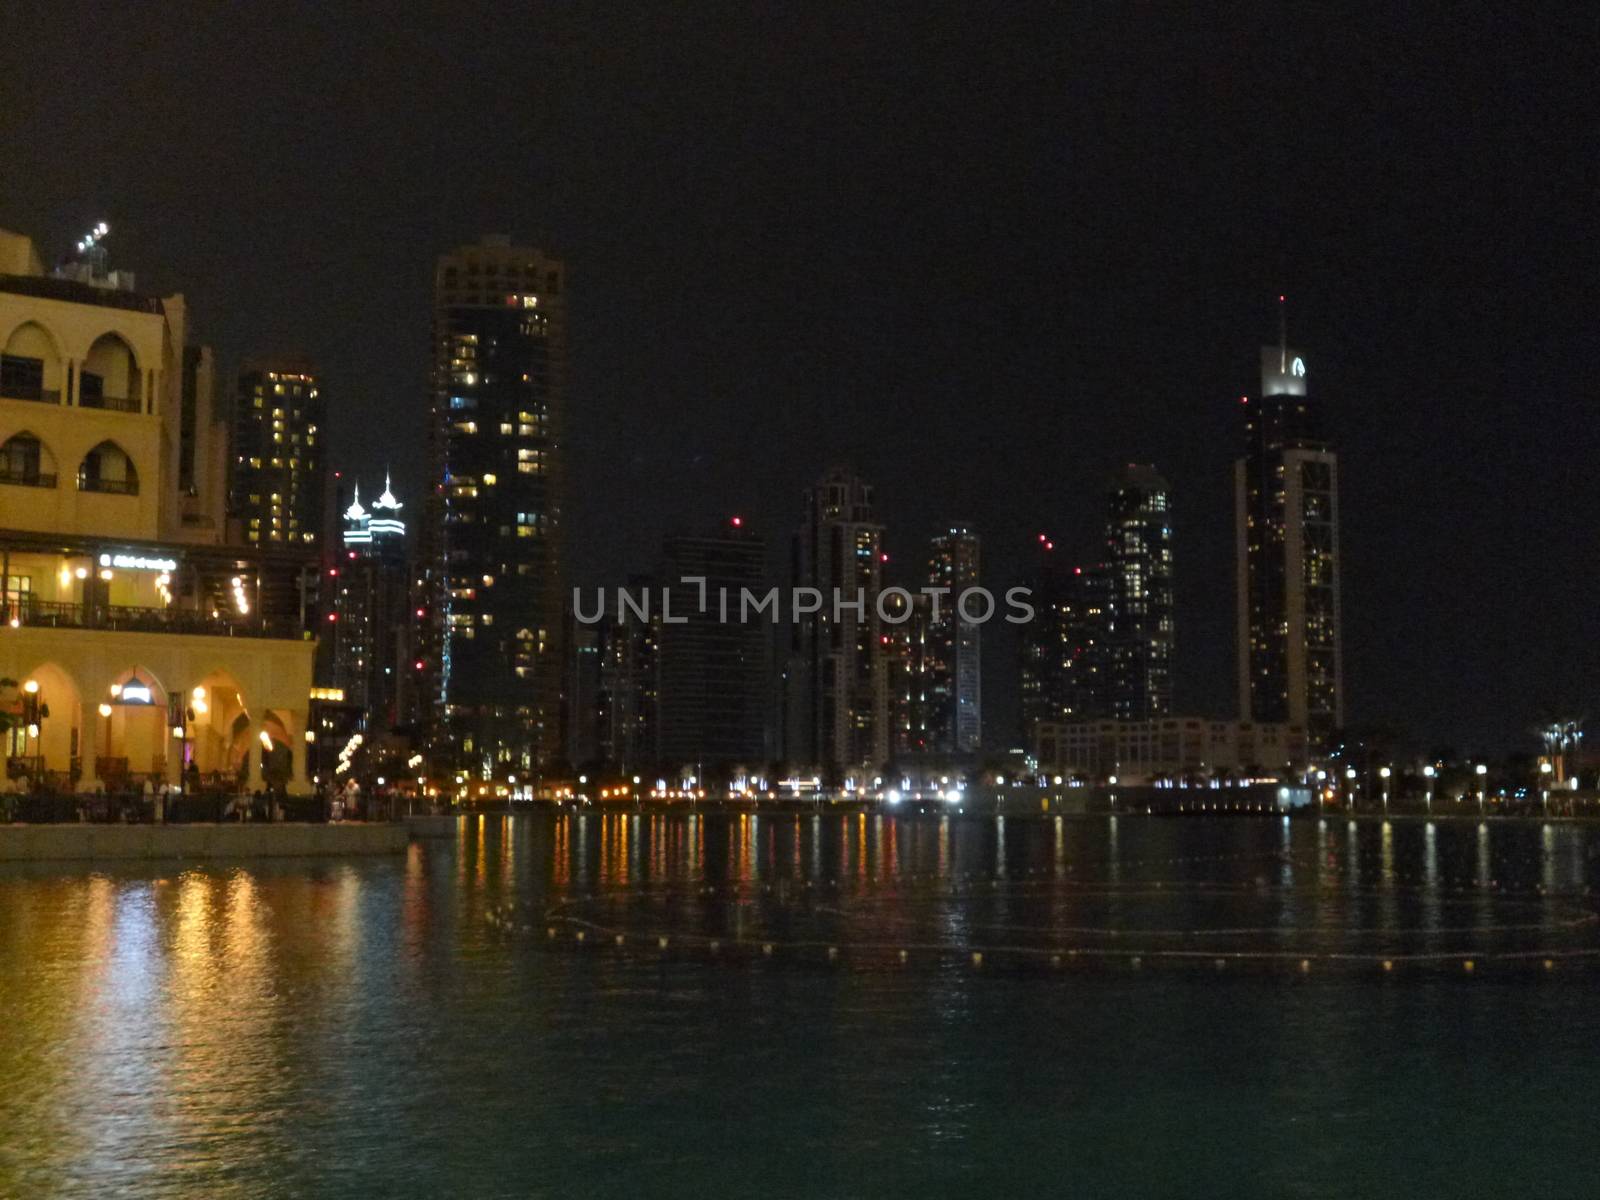 Dubai waterfront during the night